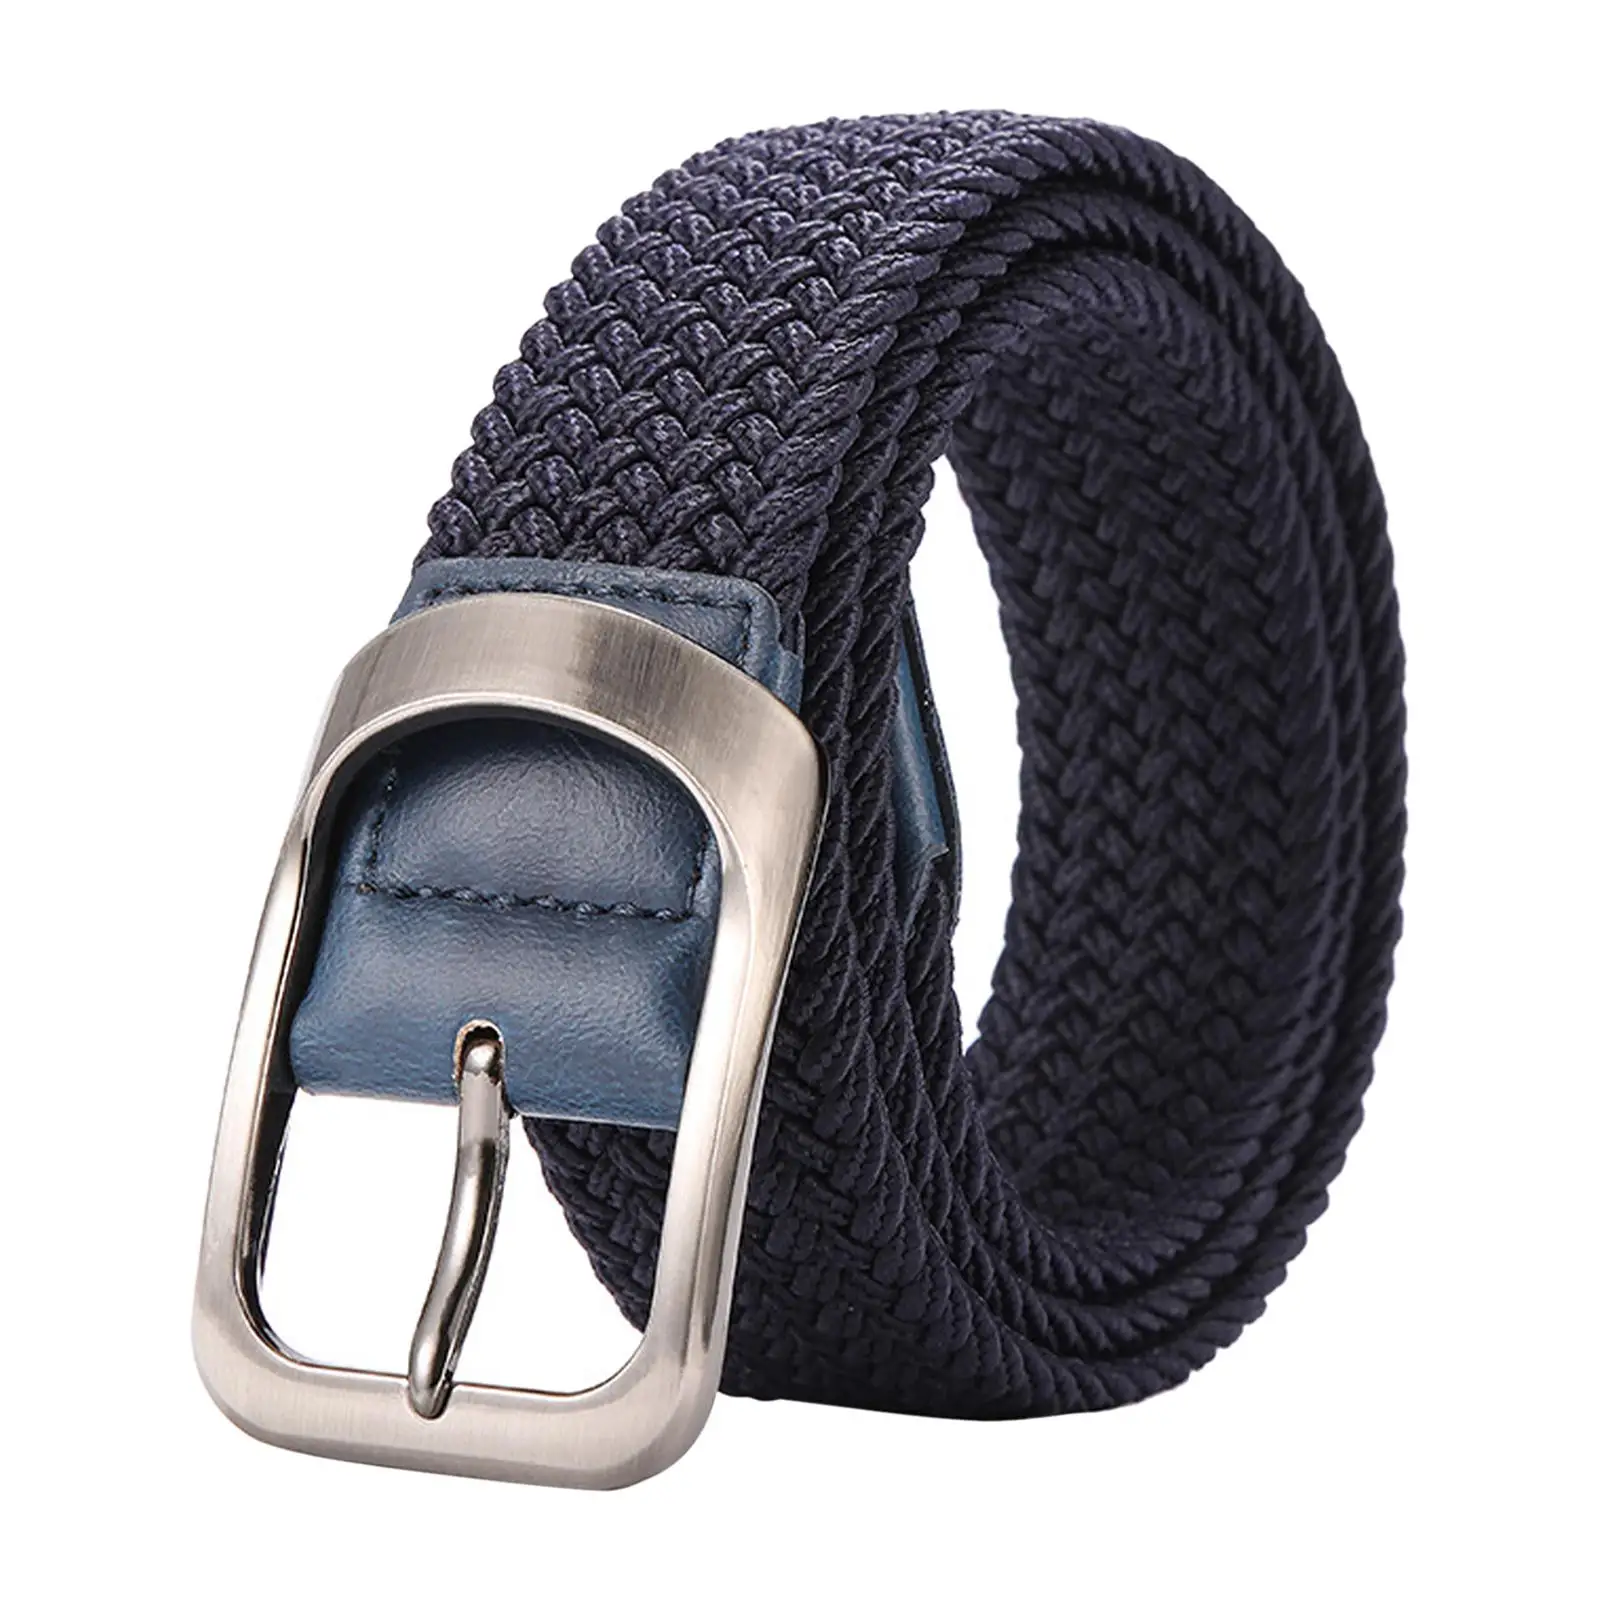 Braided Canvas Stretch Belt for Men/Women/Junior Width 1.38 inch Nylon Belt